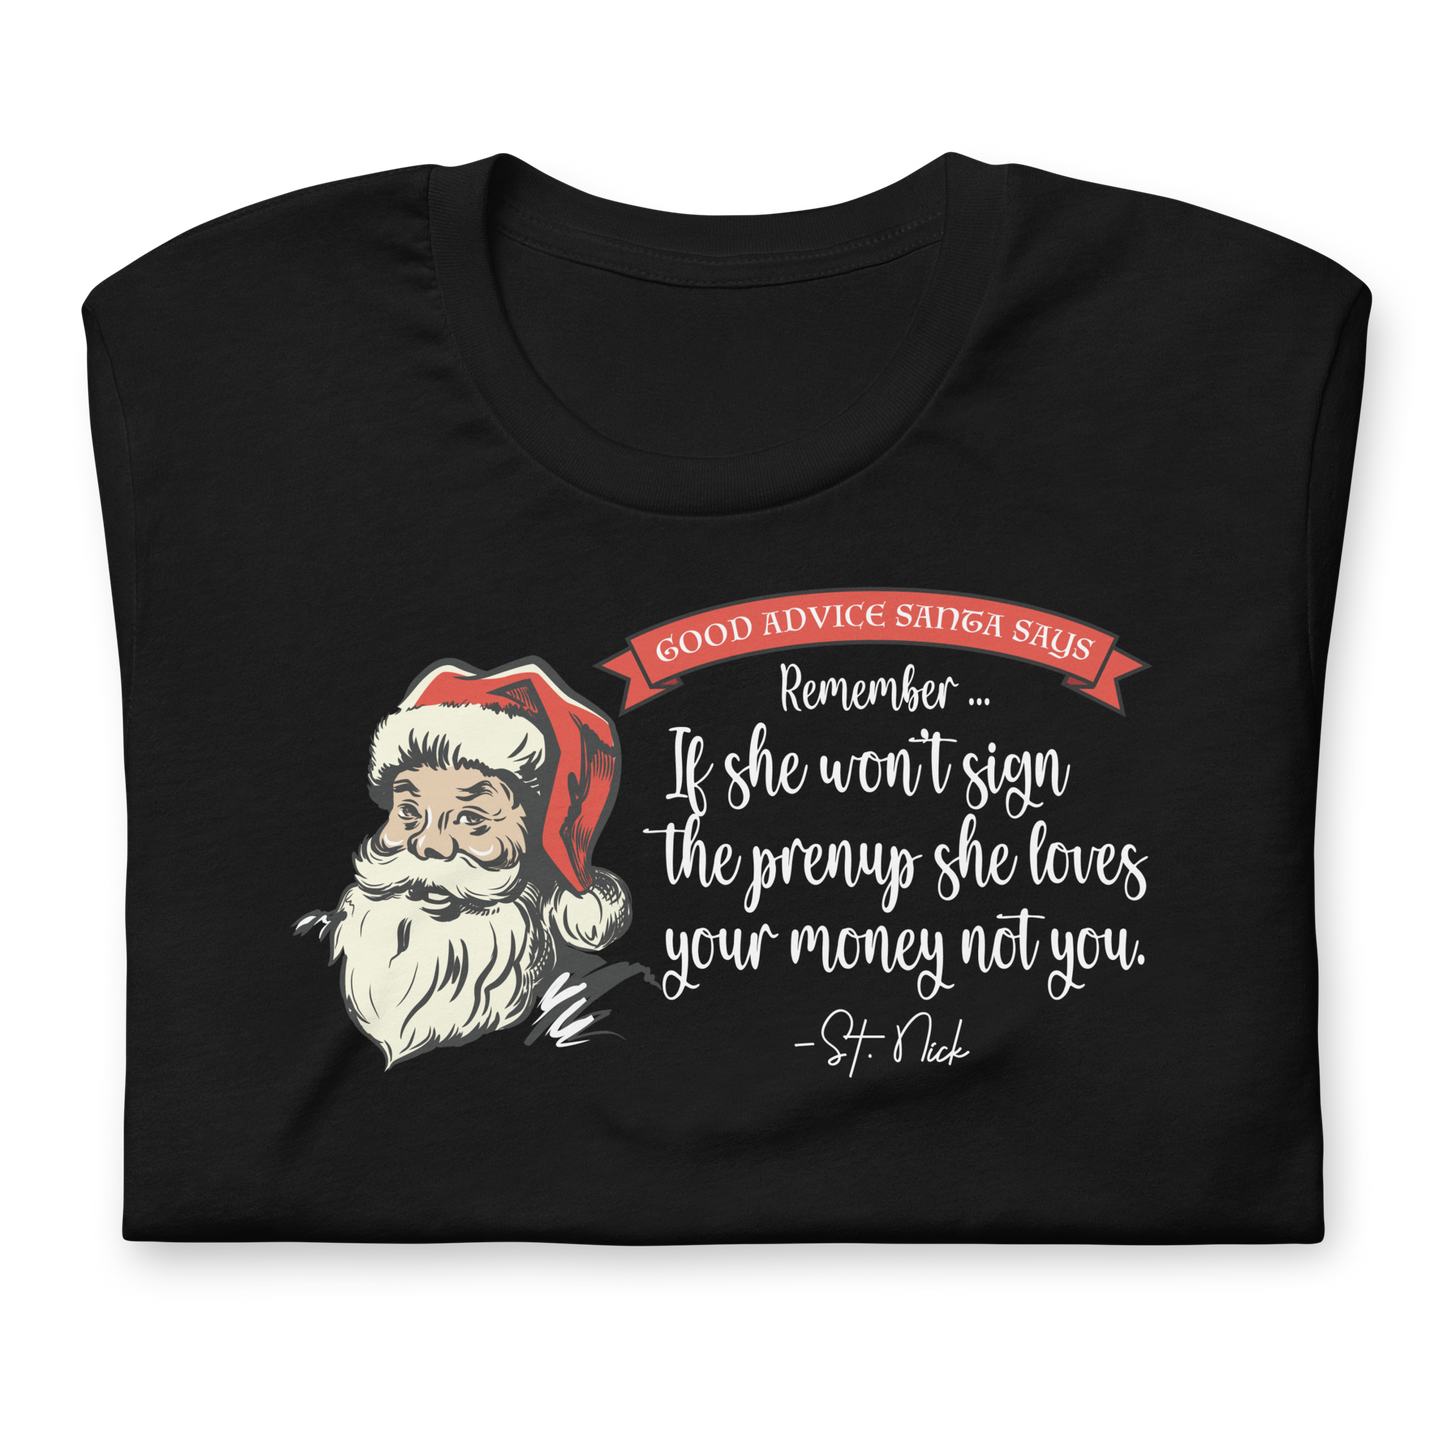 Unisex - CHRISTMAS - Good Advice Santa Says - If She Won't Sign a prenup ... - Funny t-shirt